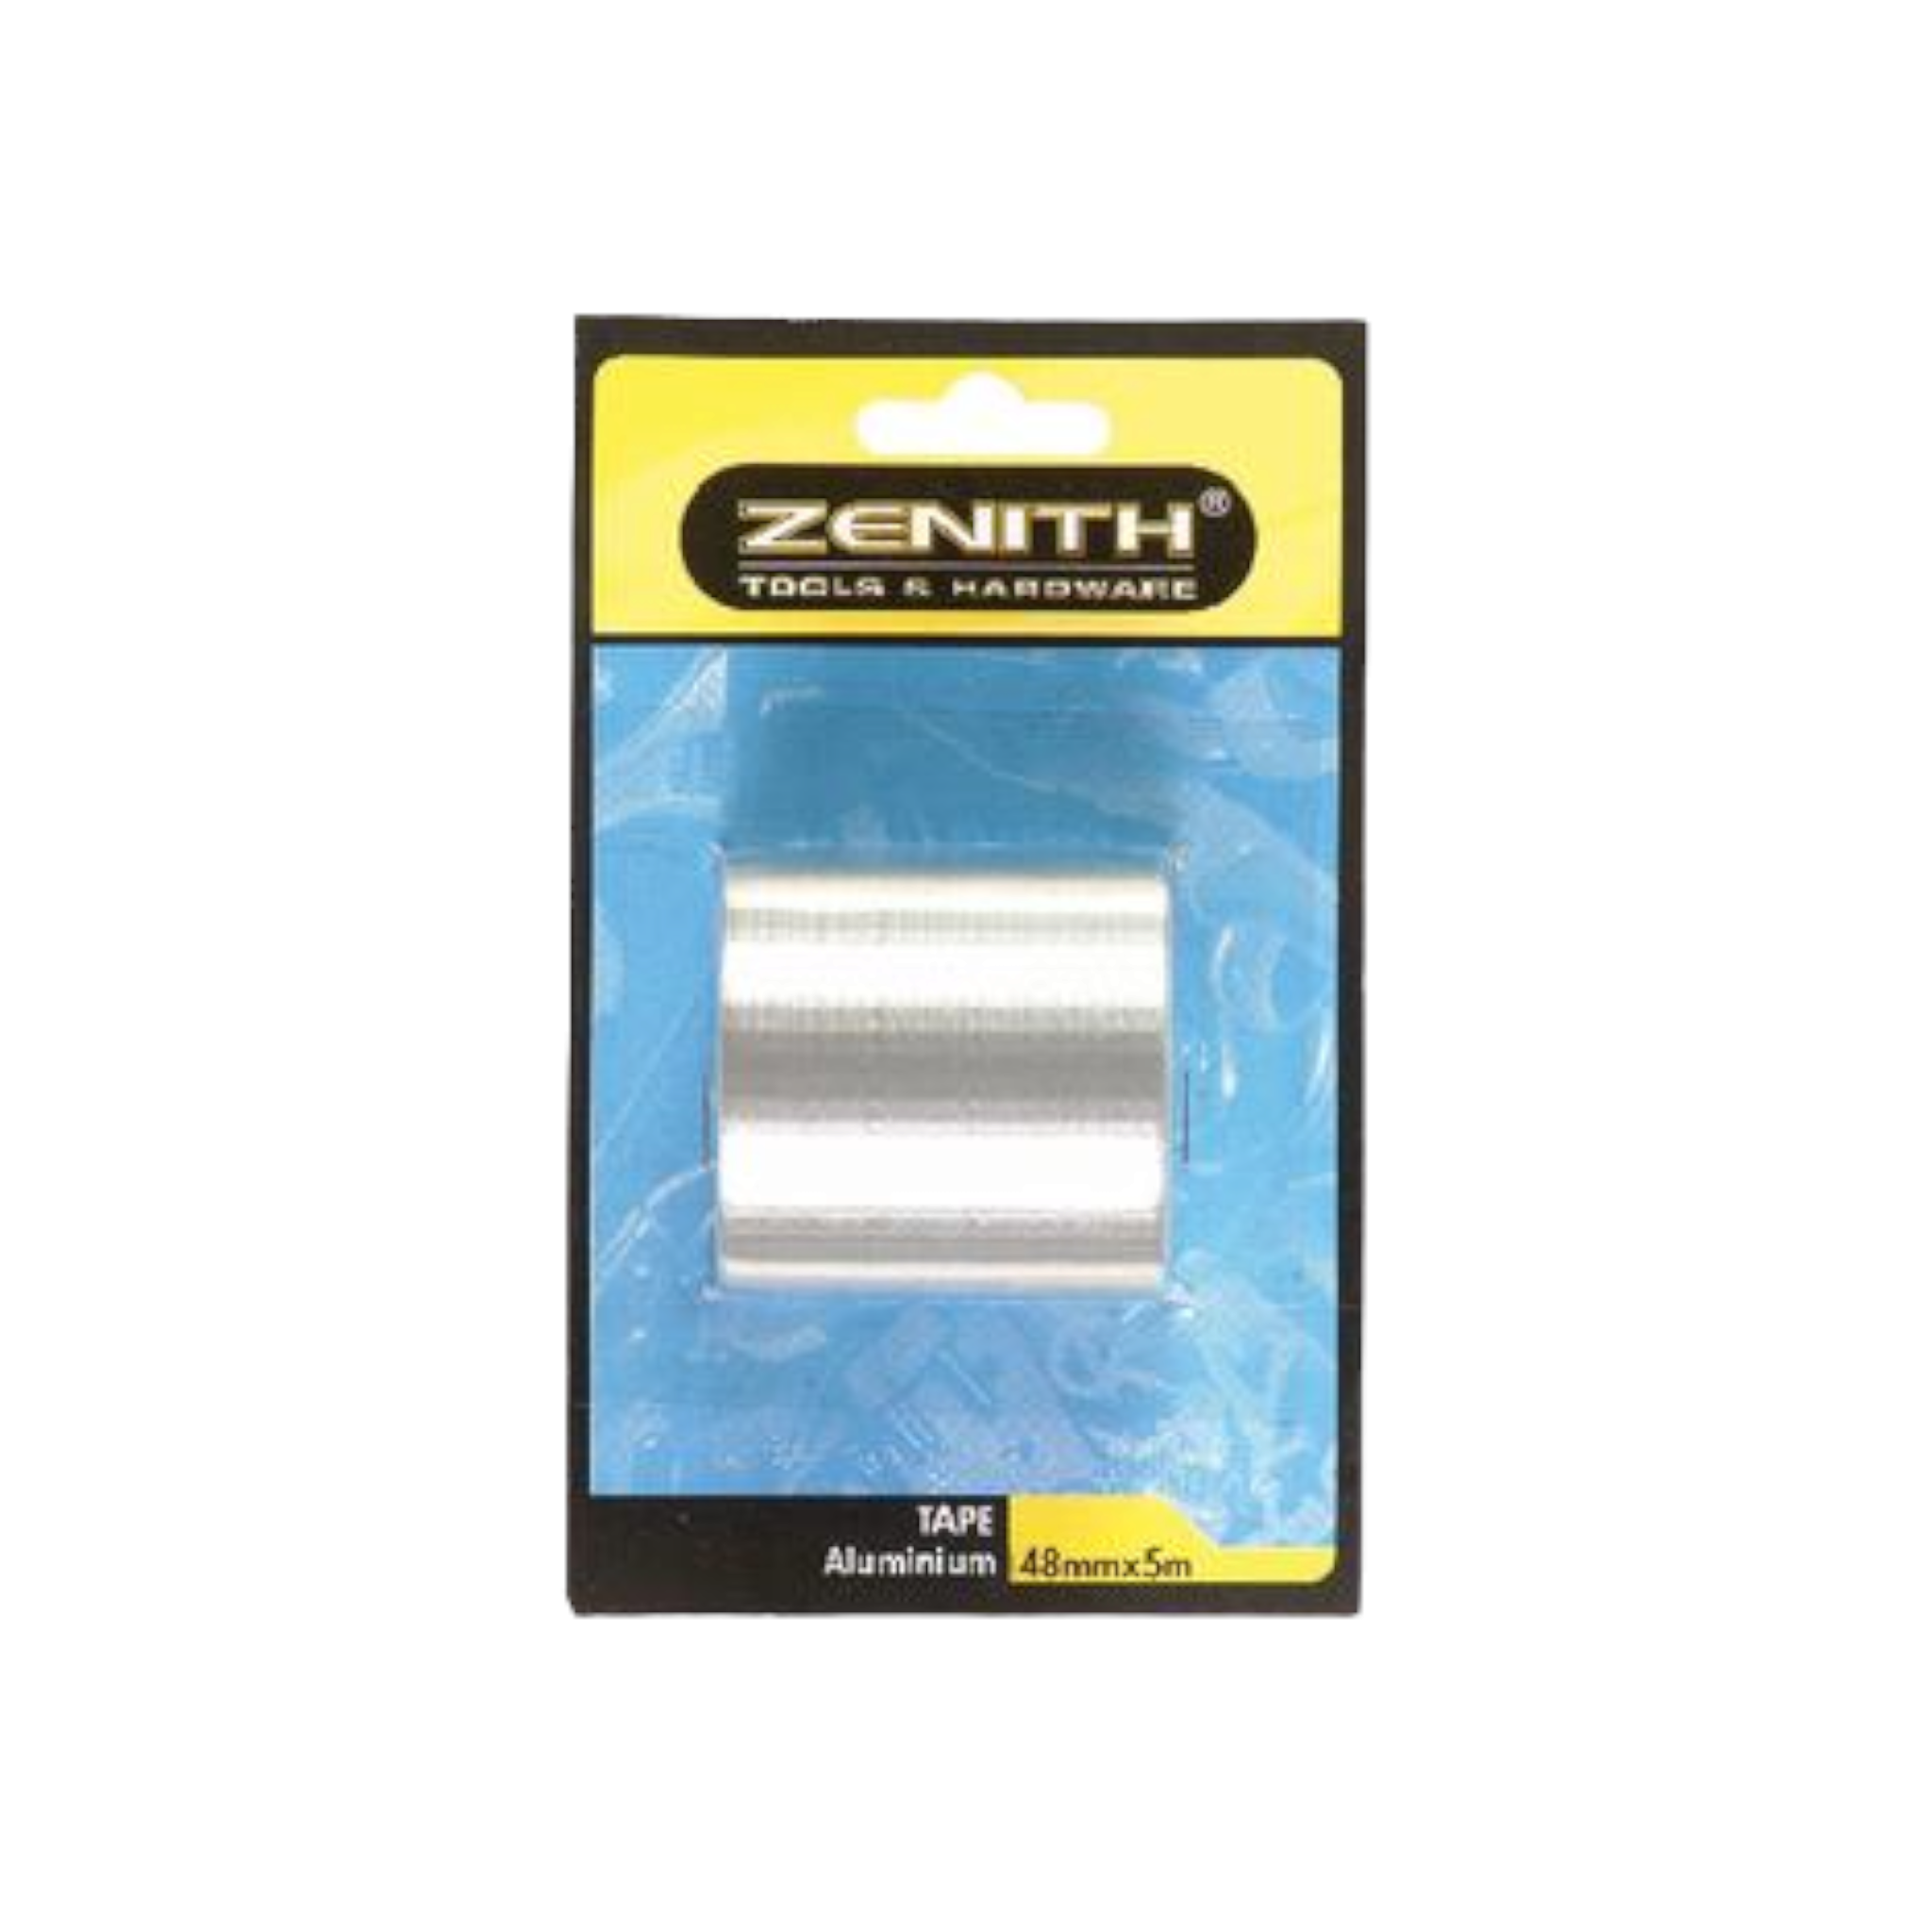 Zenith Aluminium Tape 48mmx5m